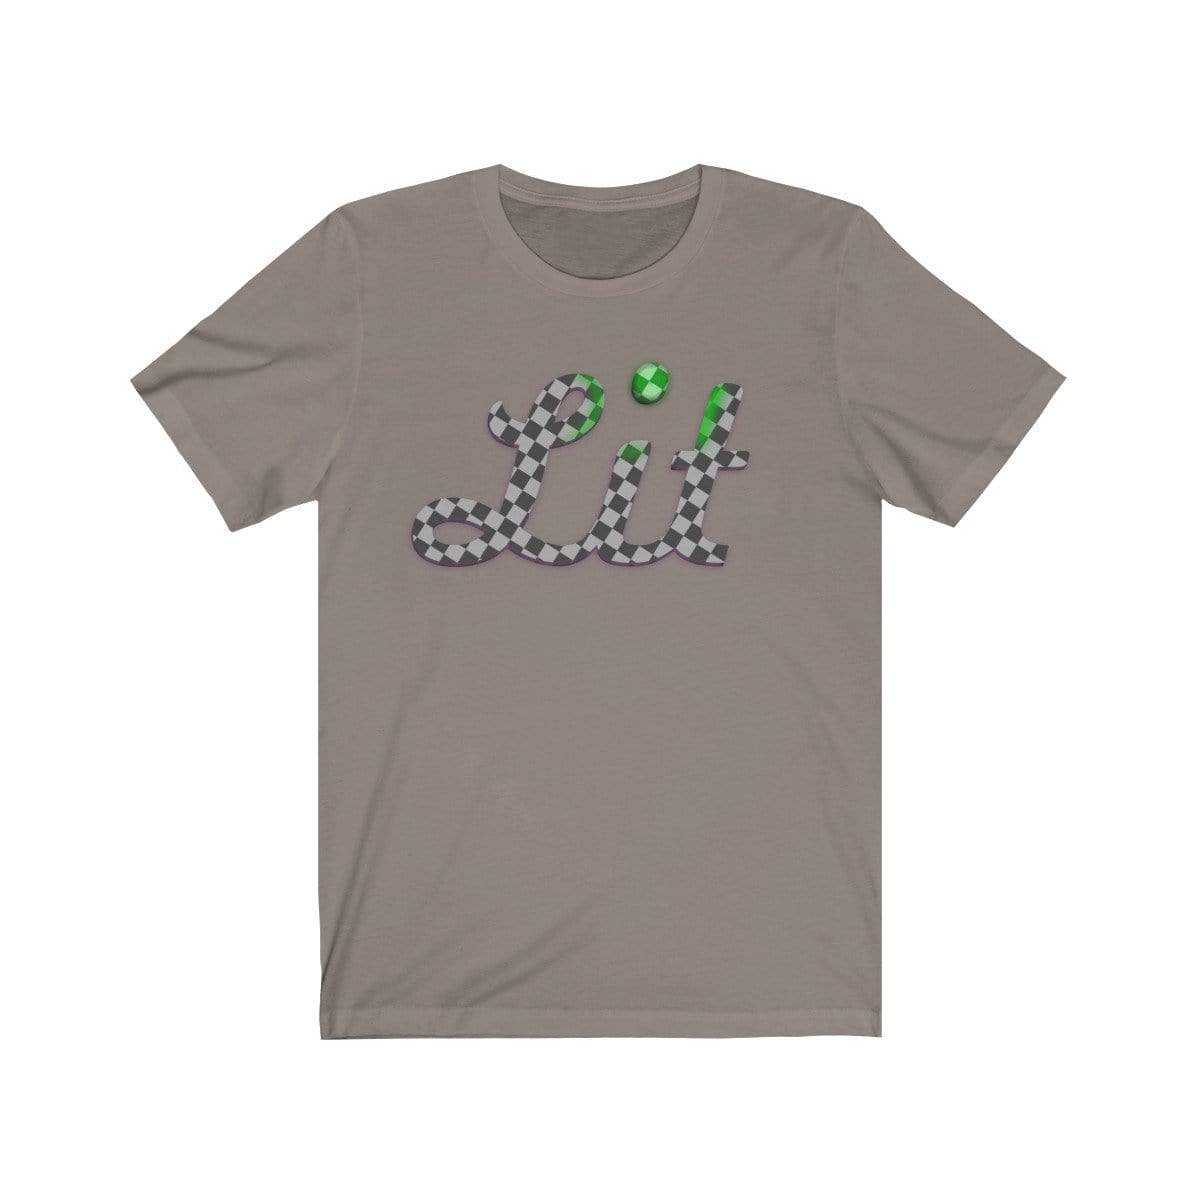 Plumskum T-Shirt Pebble Brown / S Grey Checkered Lit T-shirt